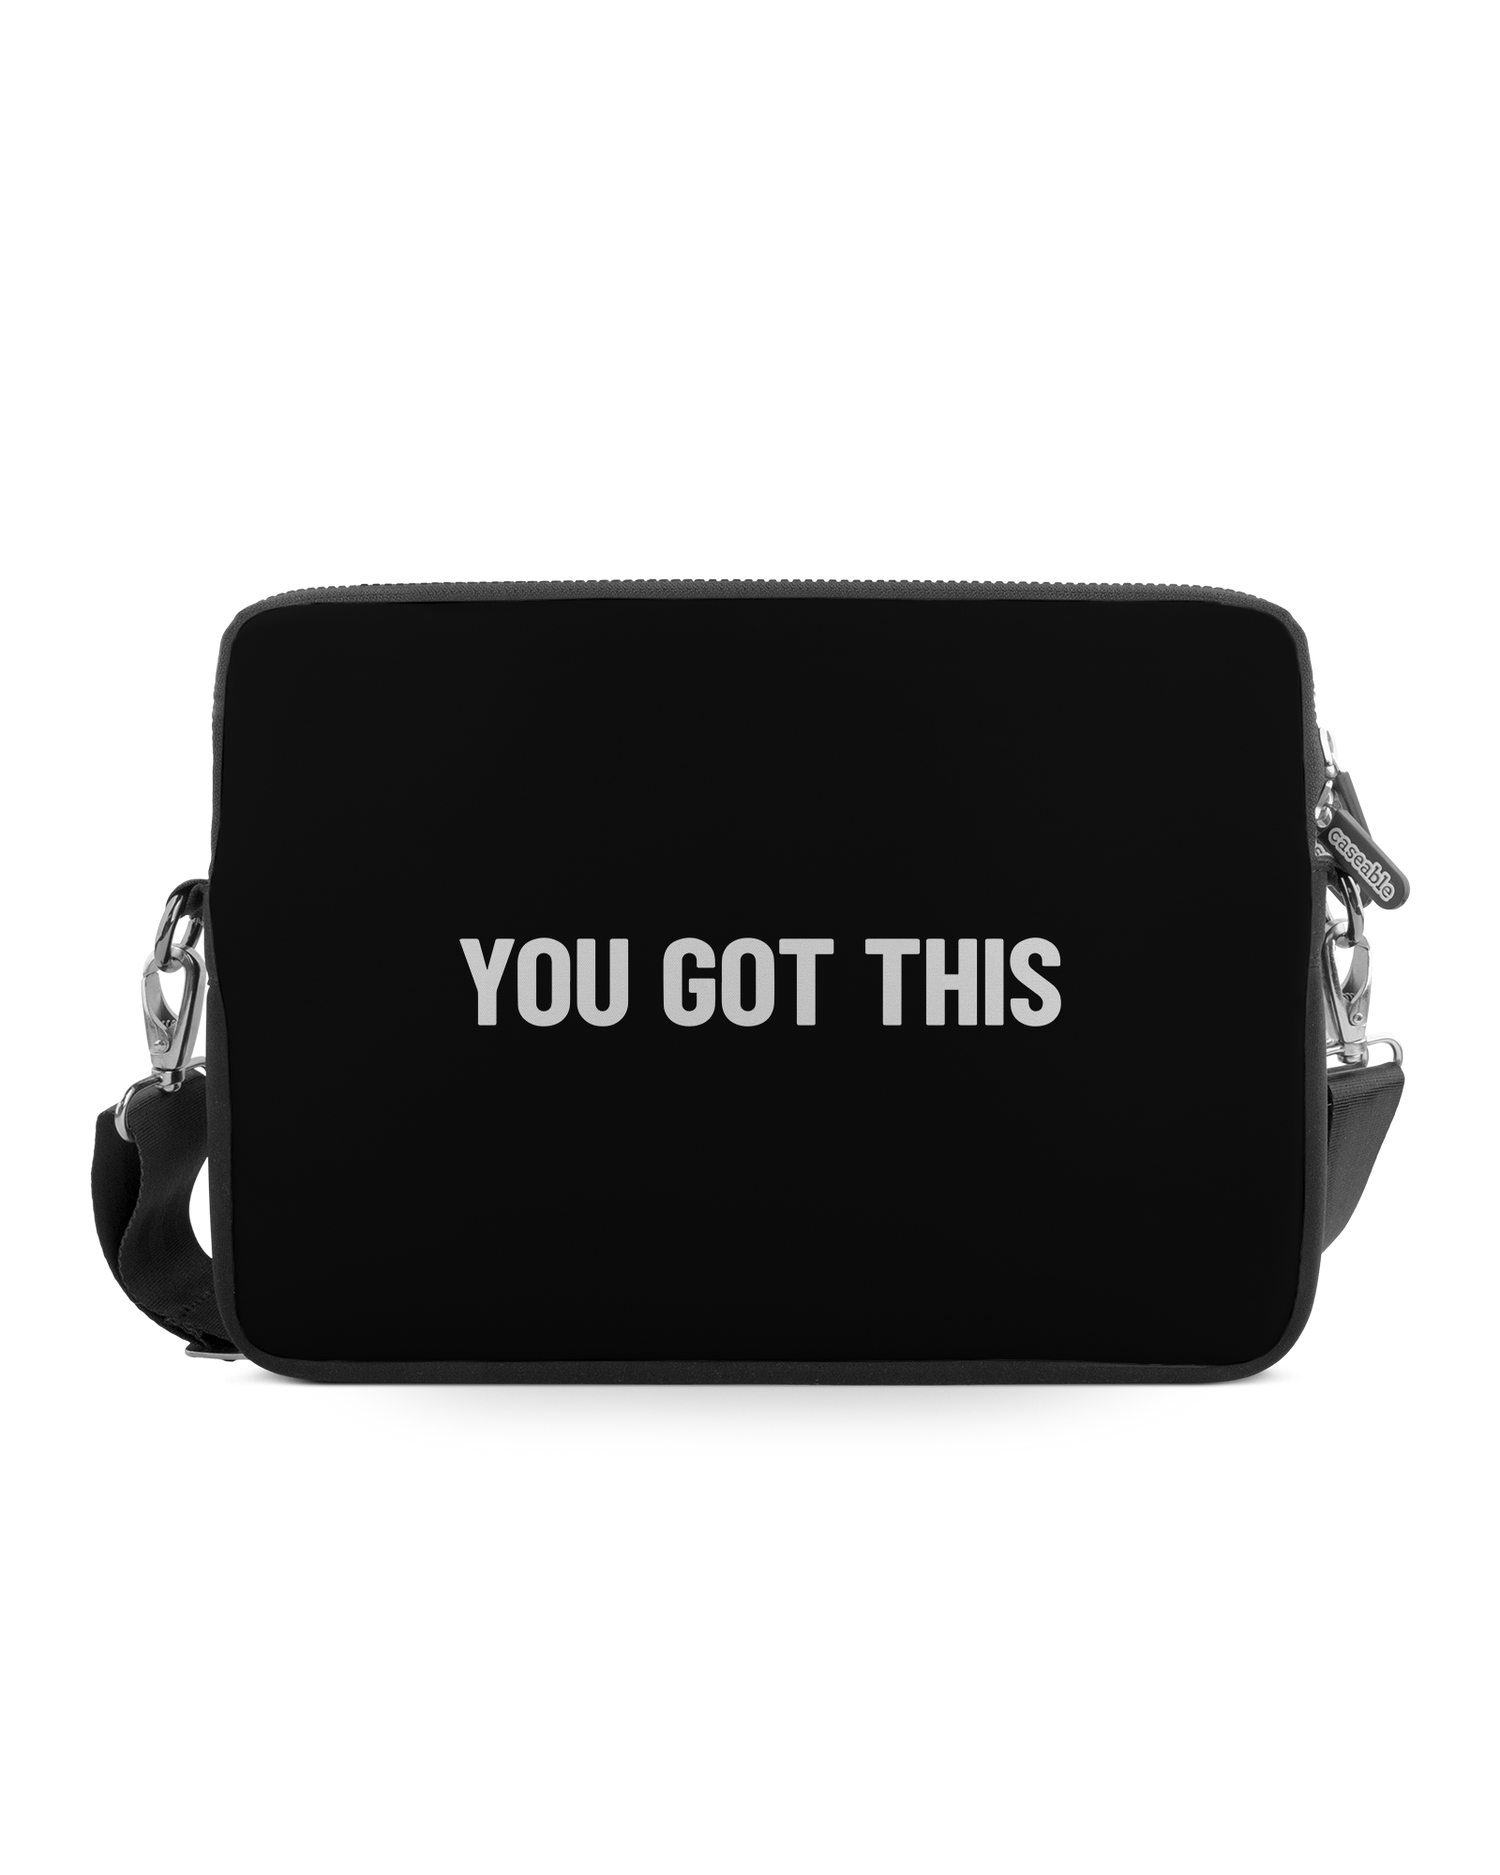 You Got This Black Premium Laptop Bag 13-14 inch: Front View